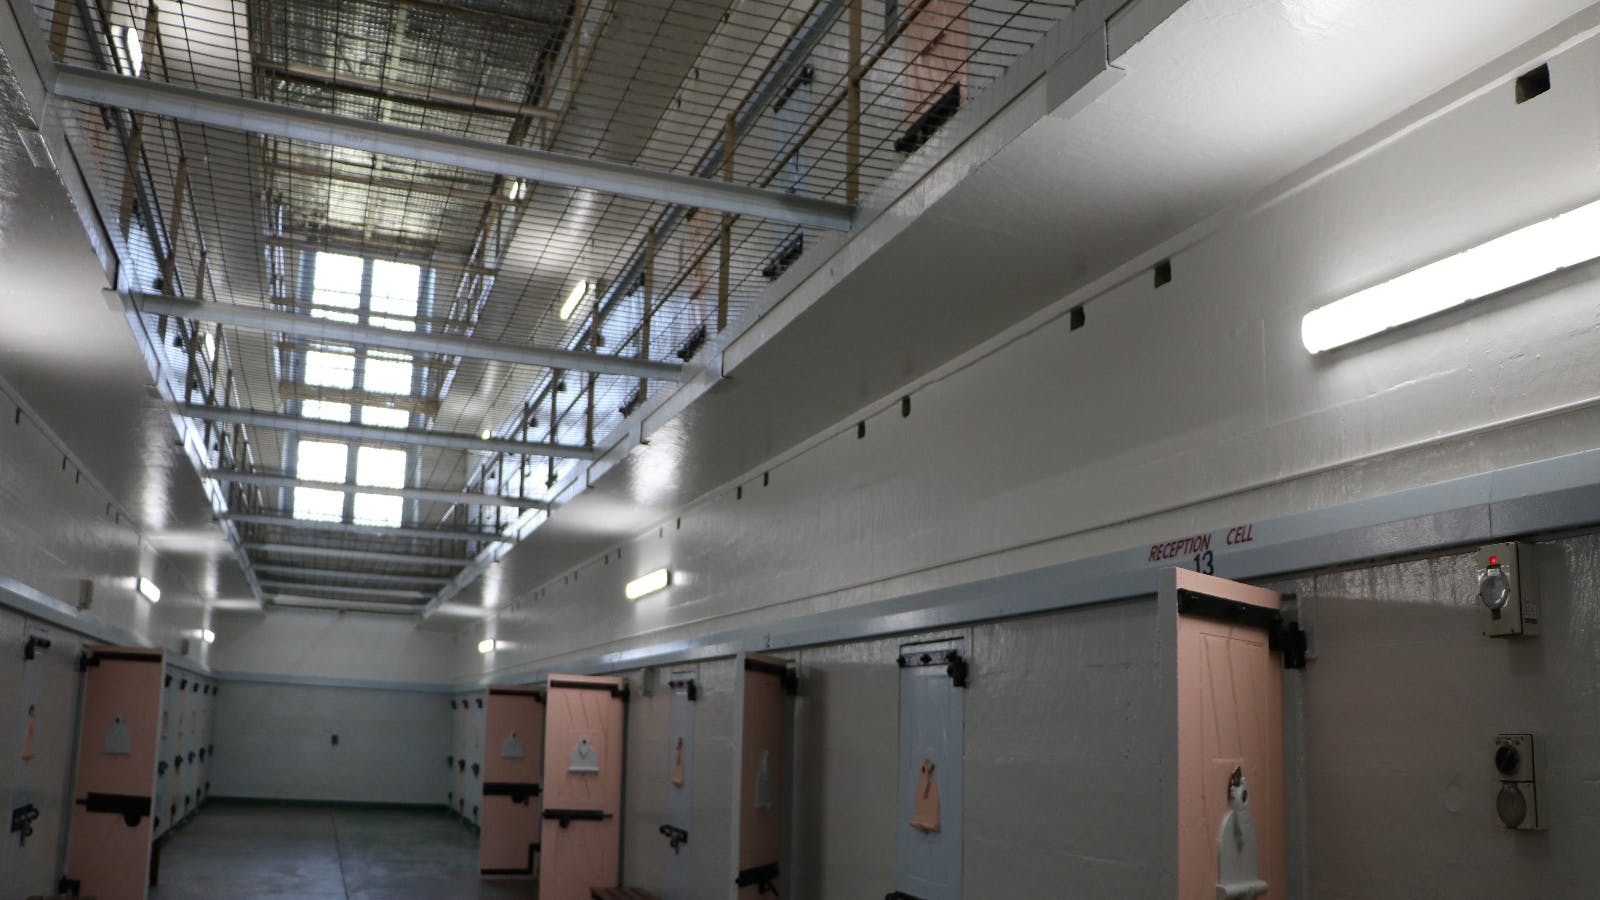 Maitland Gaol